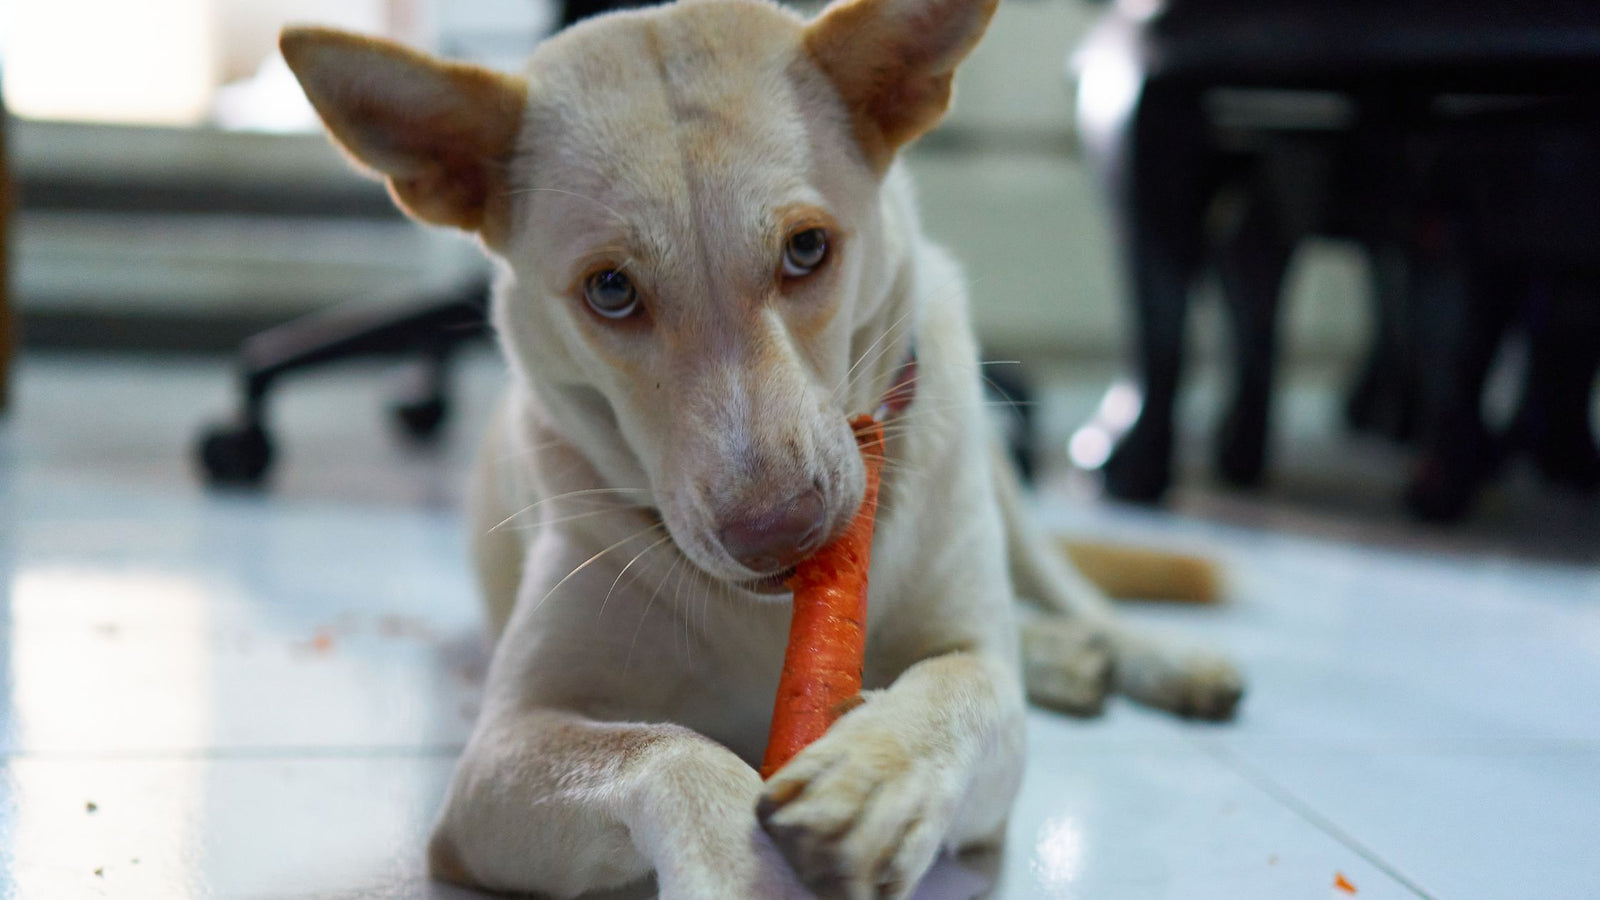 Yellow dog lying on floor eating whole carrot